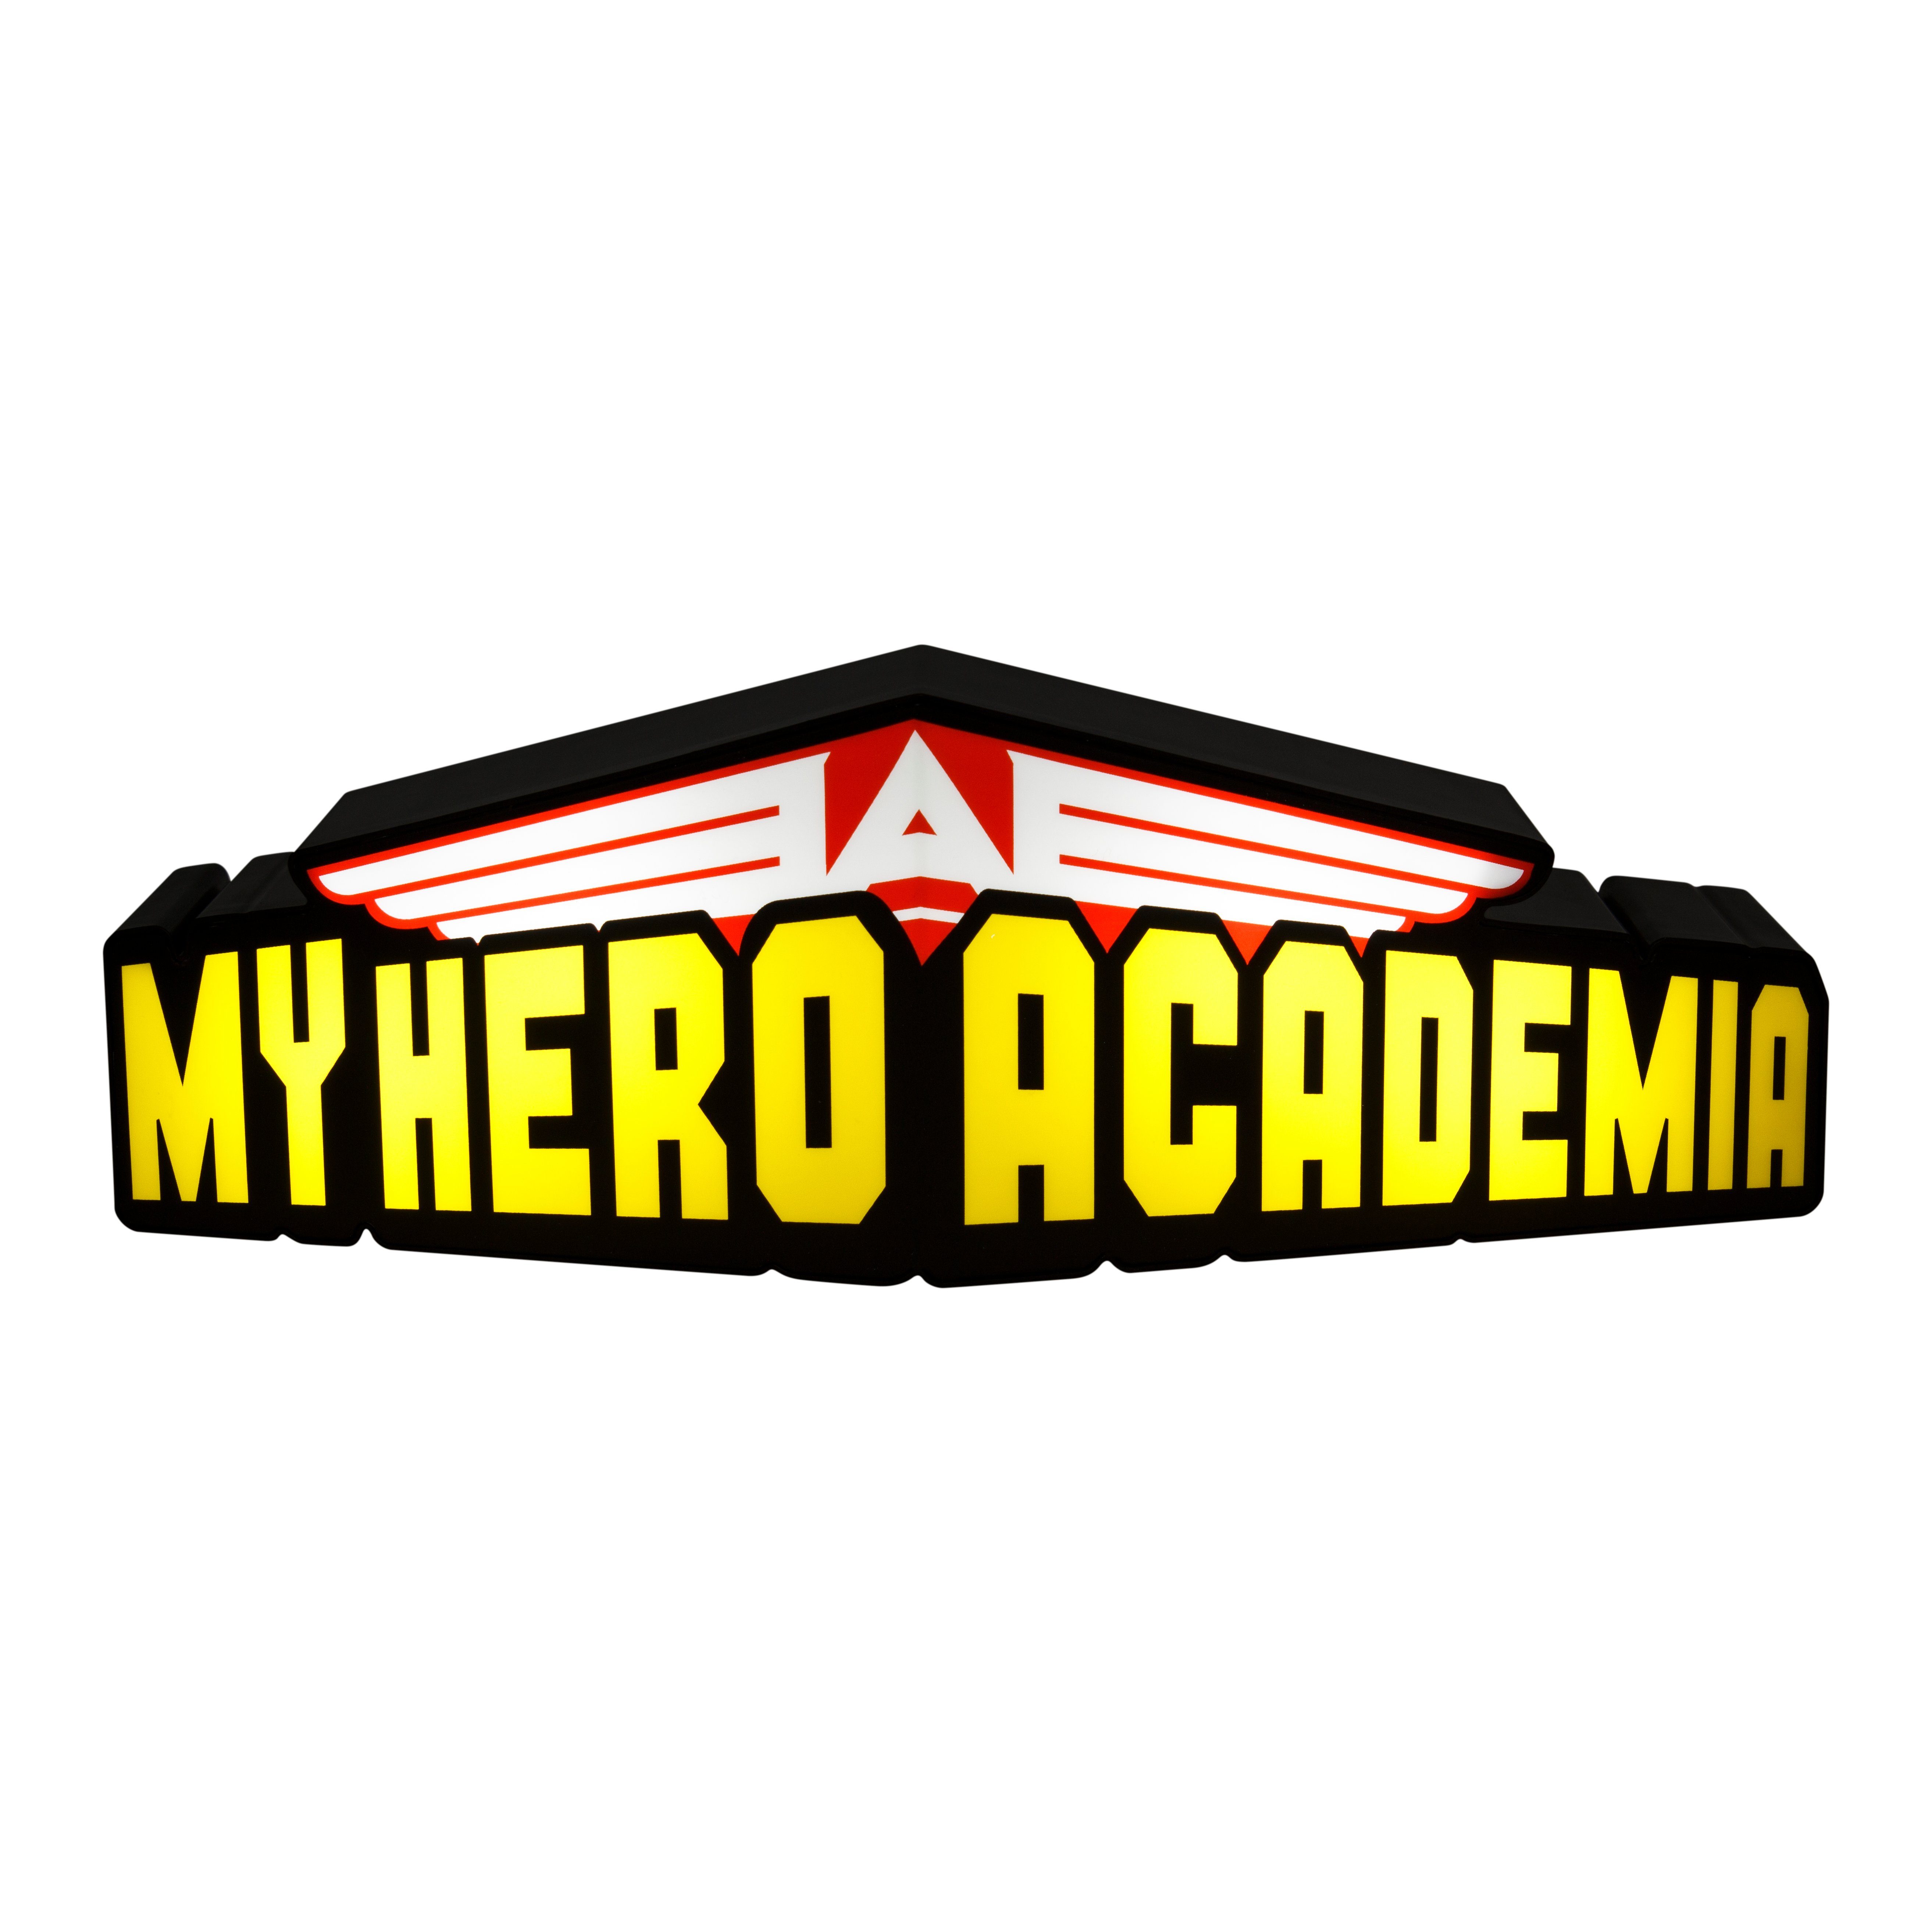 LED Academia Paladone Hero Leuchte My Dekolicht Logo